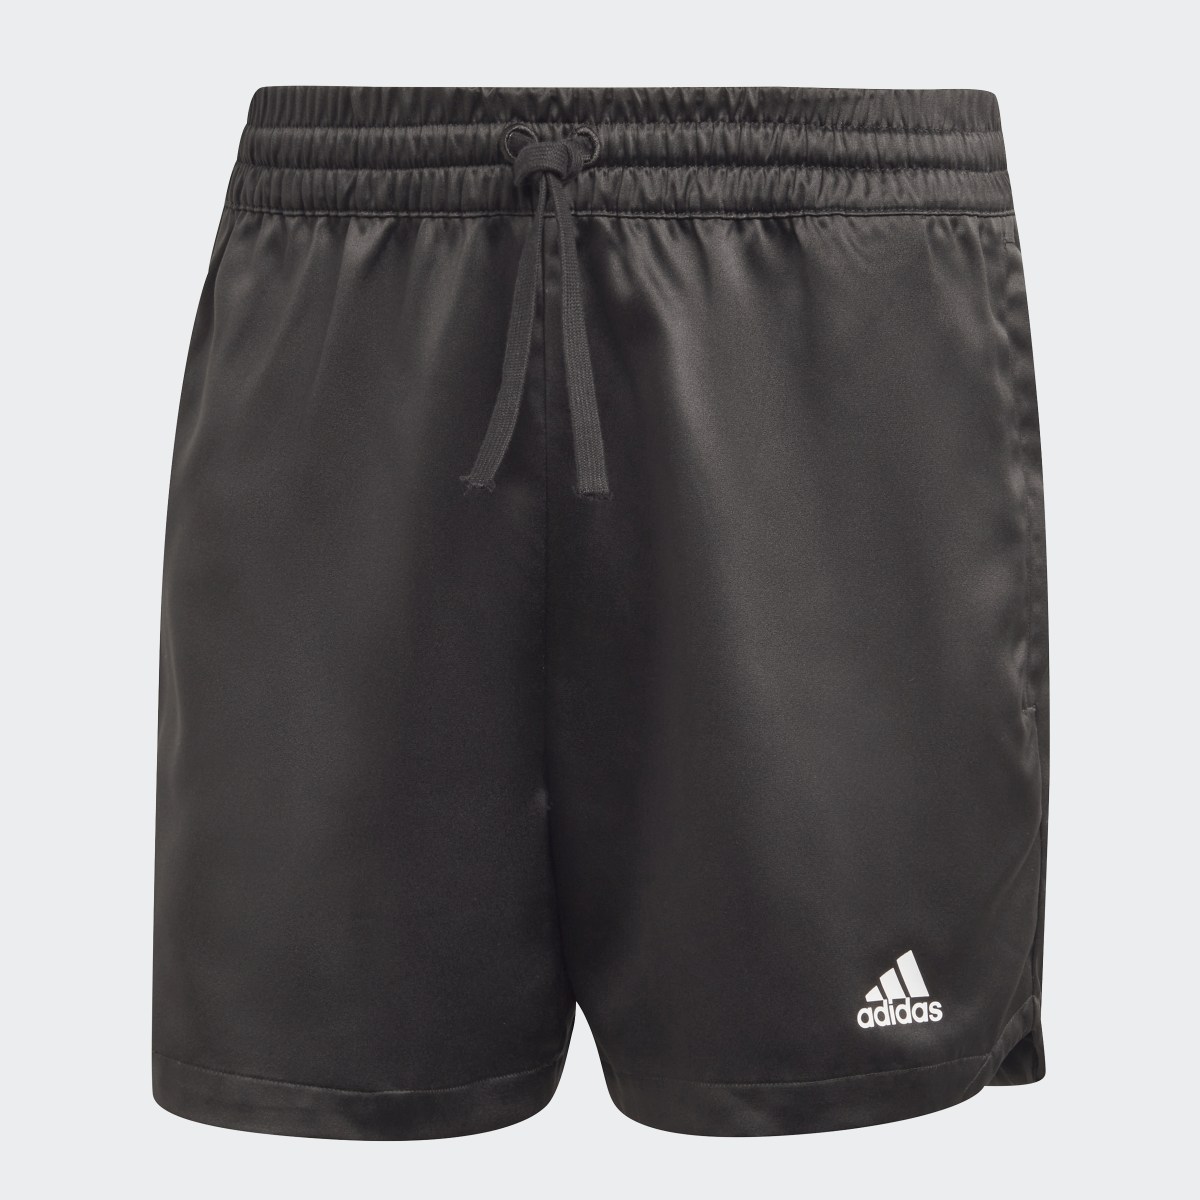 Adidas Satin Shorts. 5